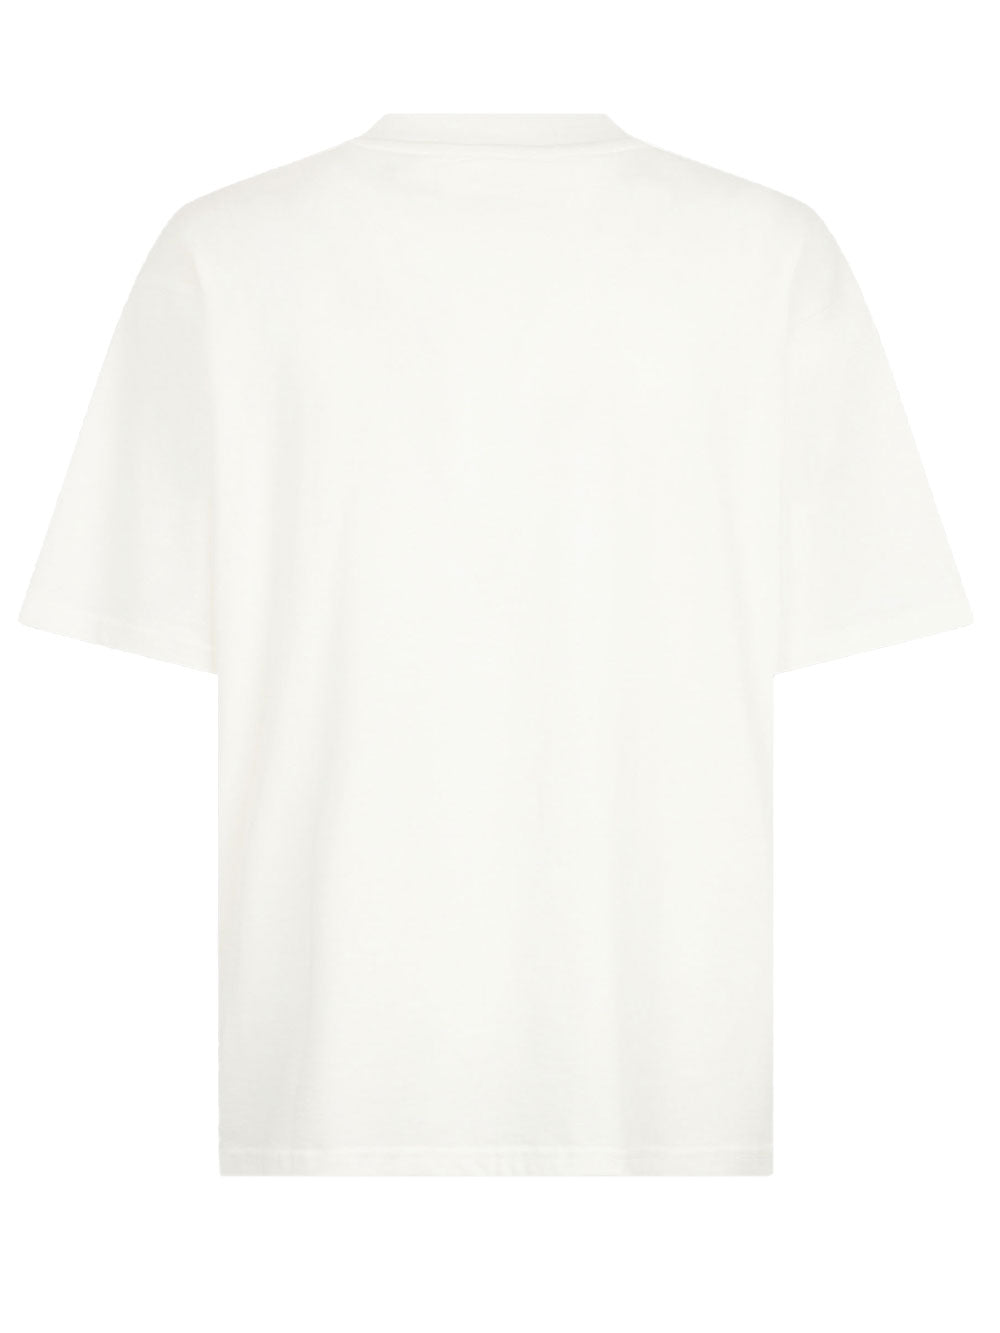 T-shirt PHOBIA Uomo PH00543 Bianco